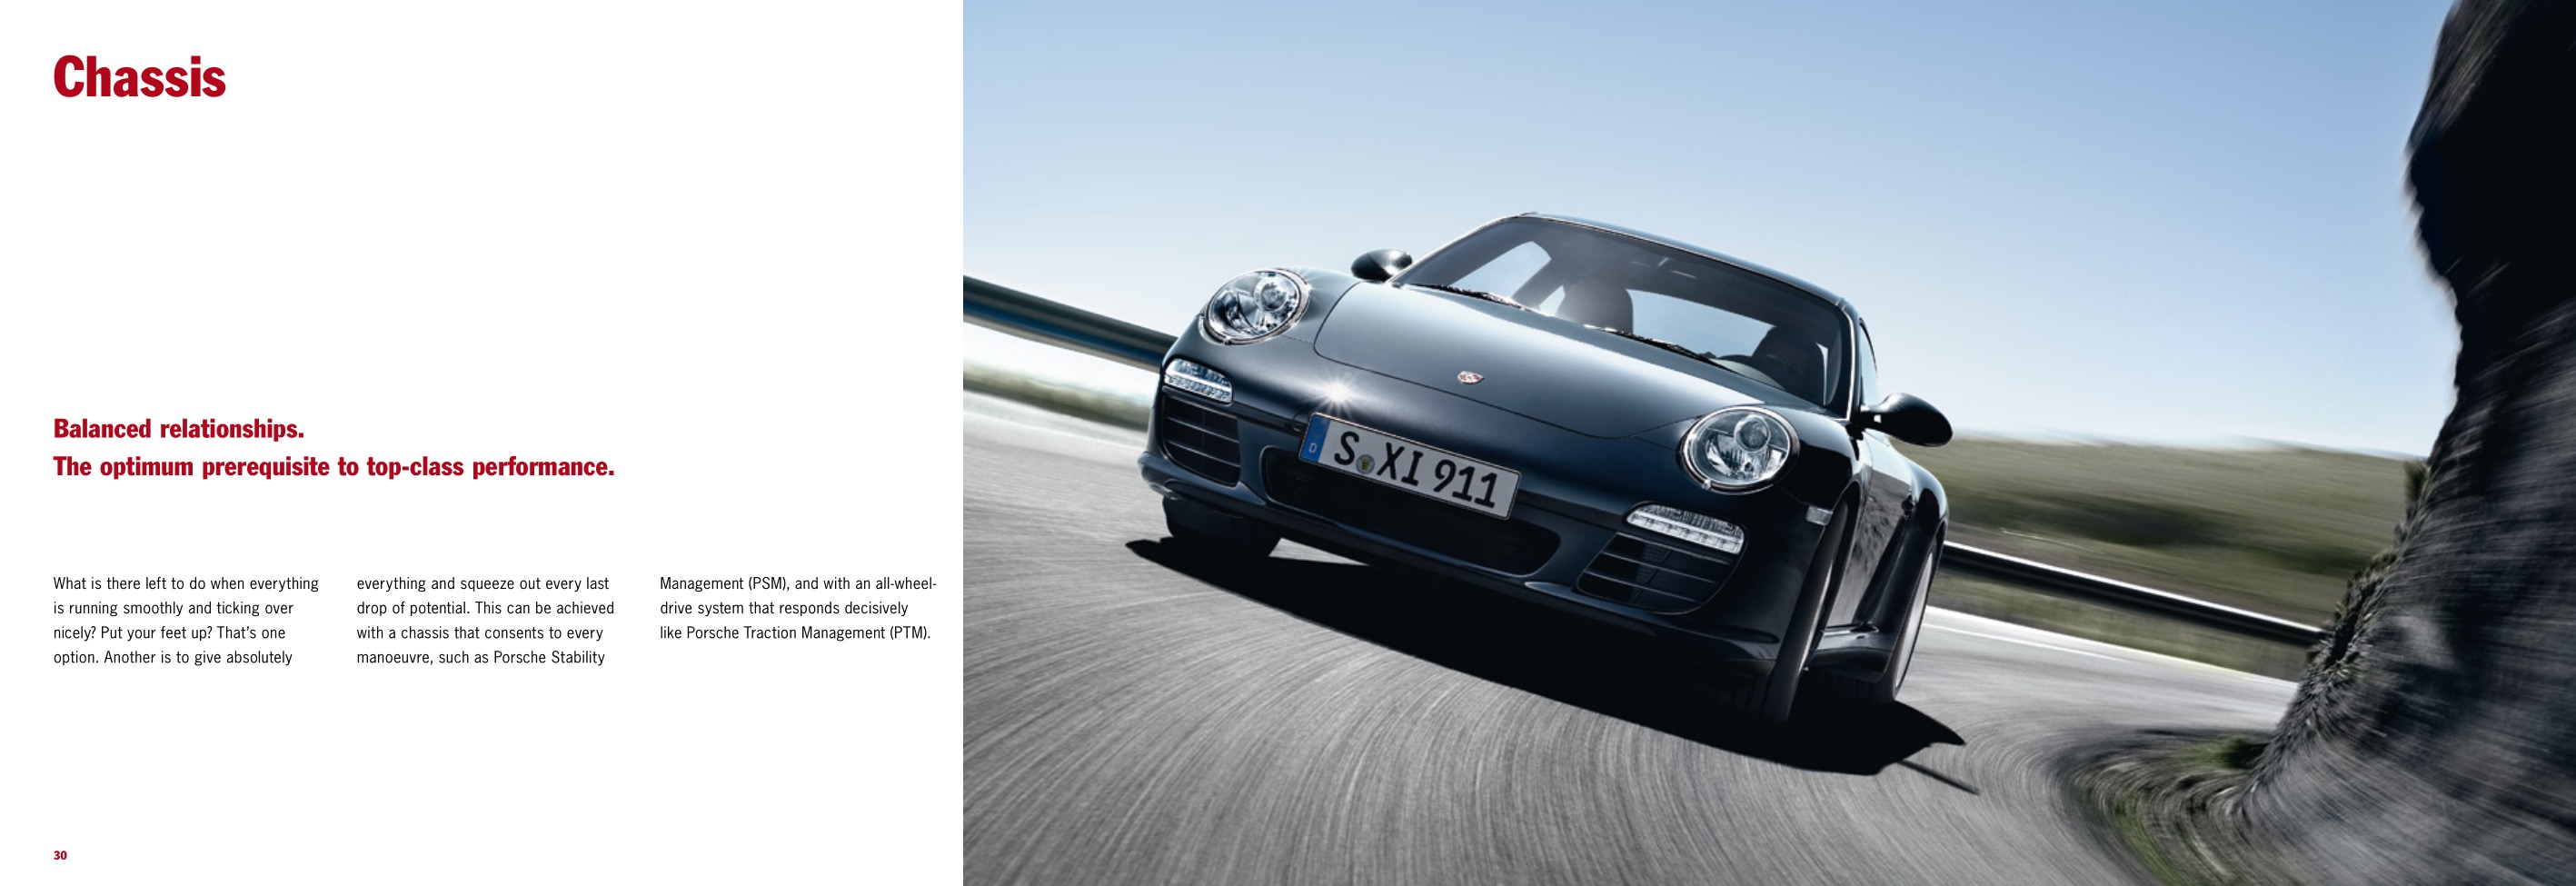 2012 Porsche 911 997 Brochure Page 31